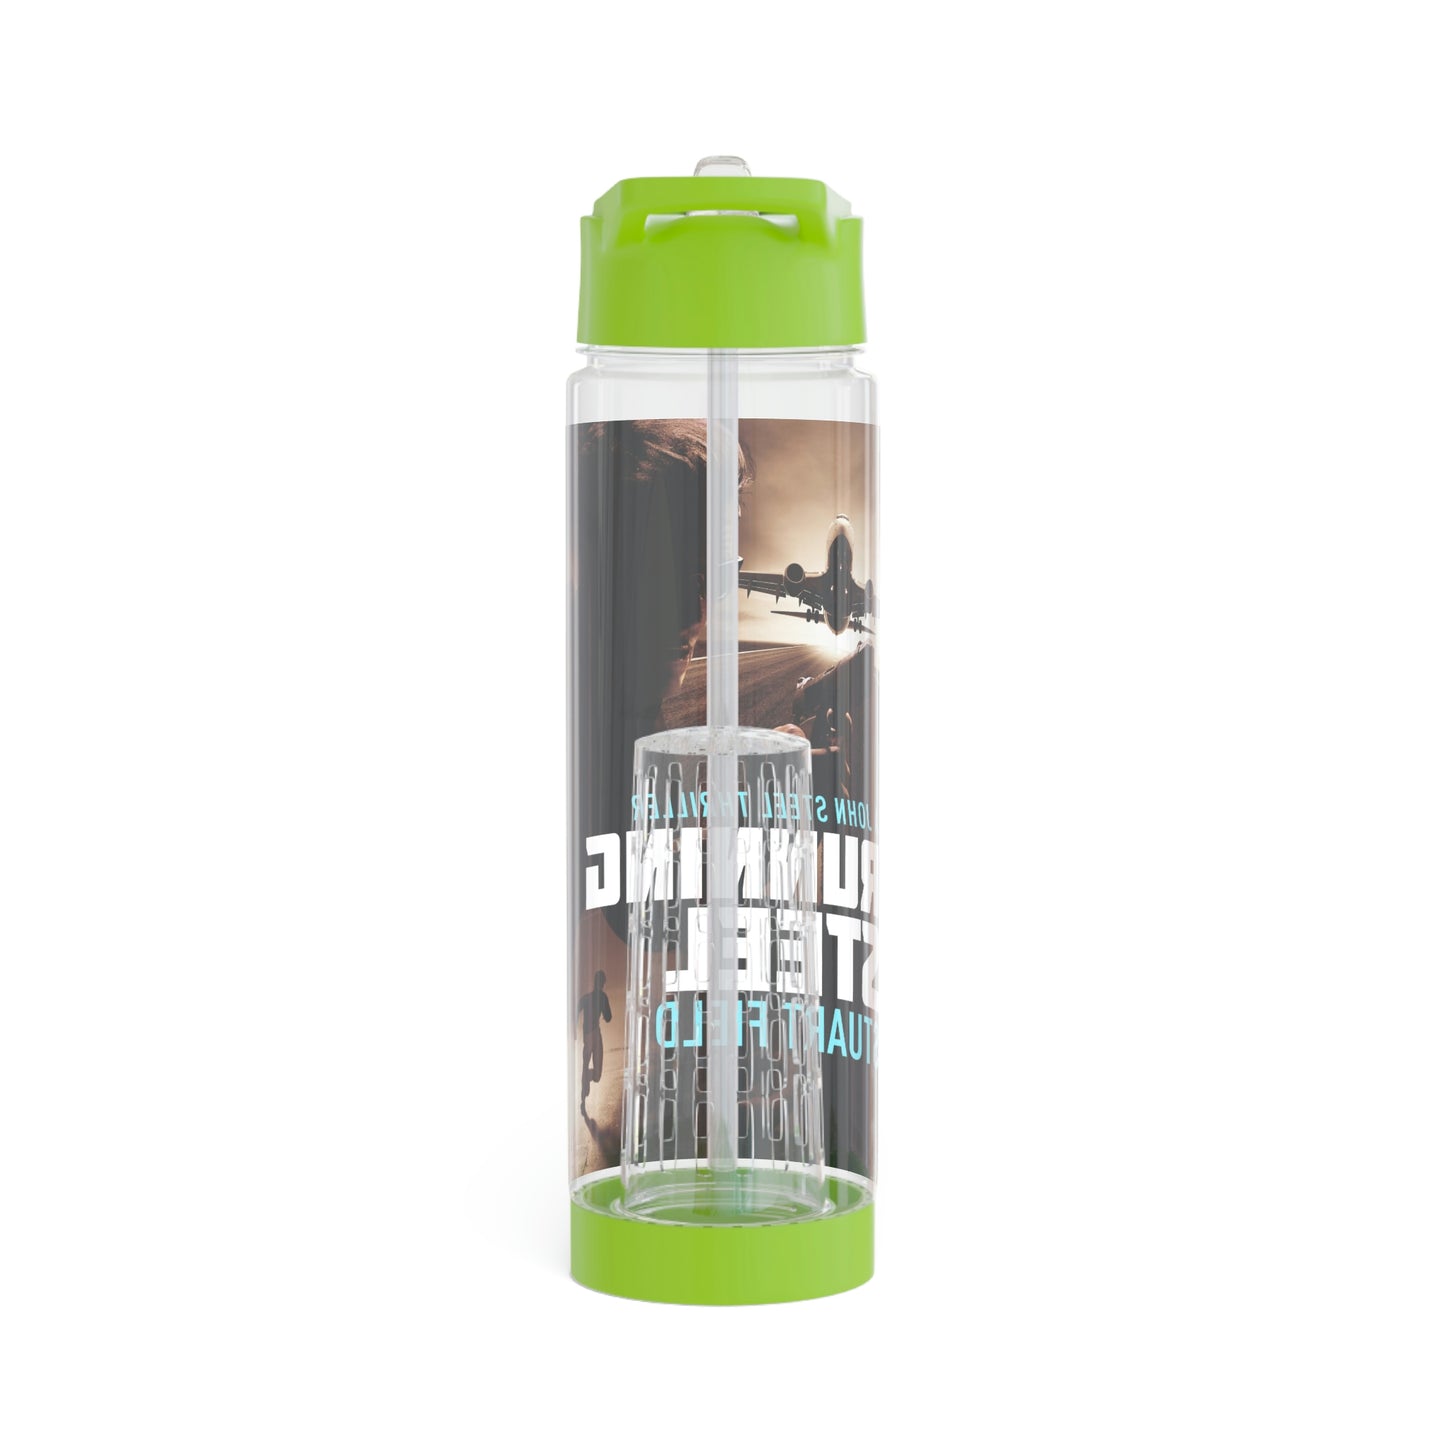 Running Steel - Infuser Water Bottle